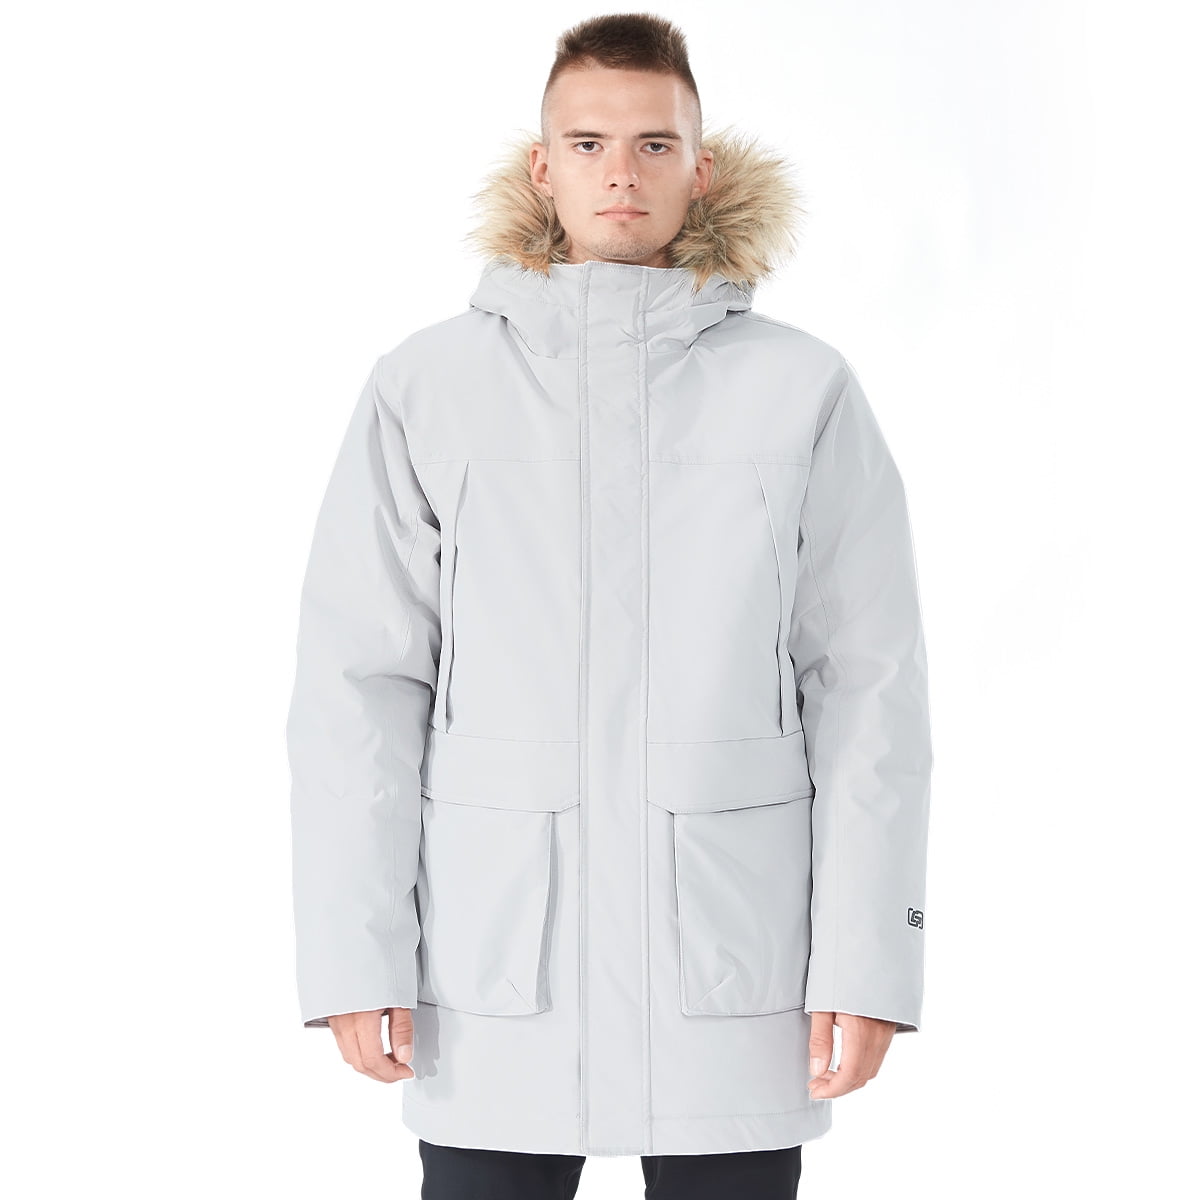 Goplus Men's Hooded Down Jacket Insulated Winter Puffer Parka Coat w ...